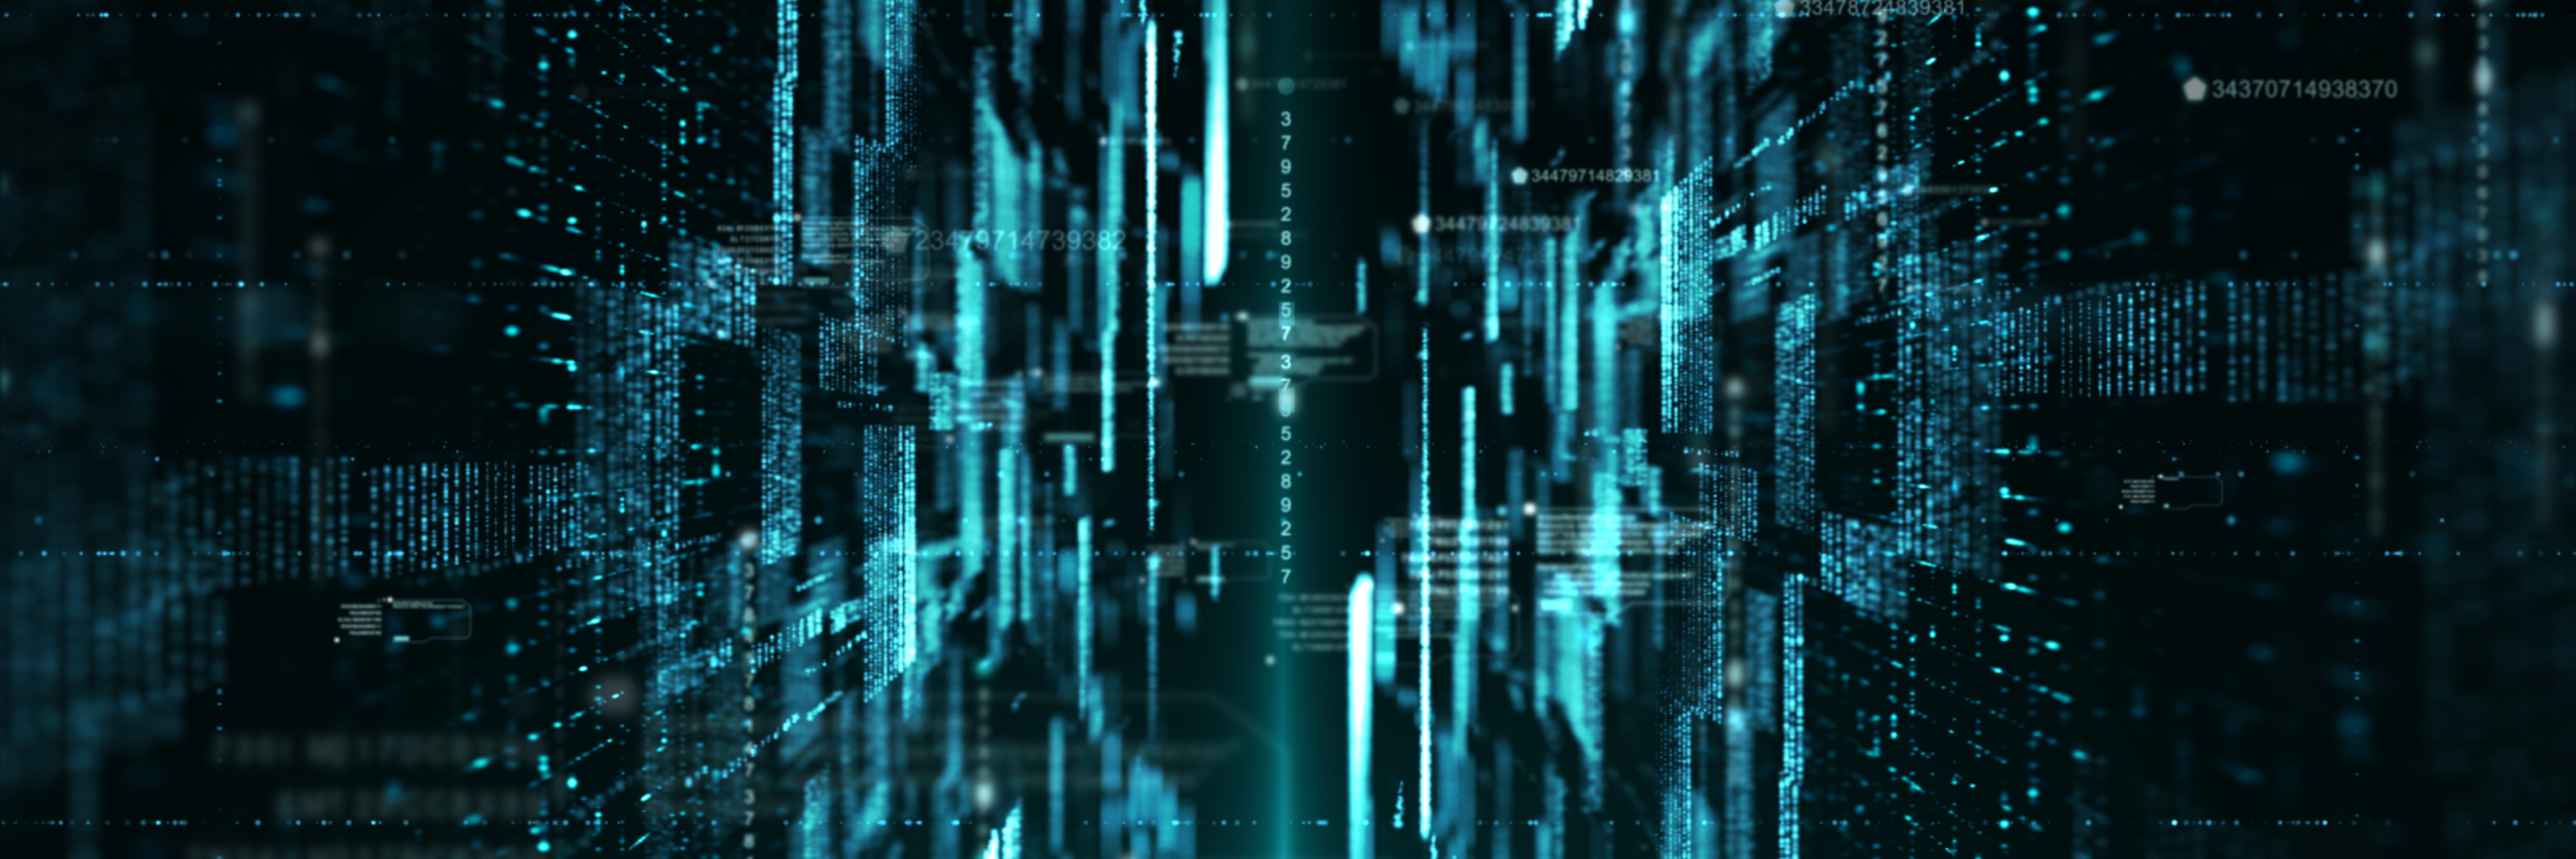 Full Frame Shot Of Illuminated Cyberspace Data